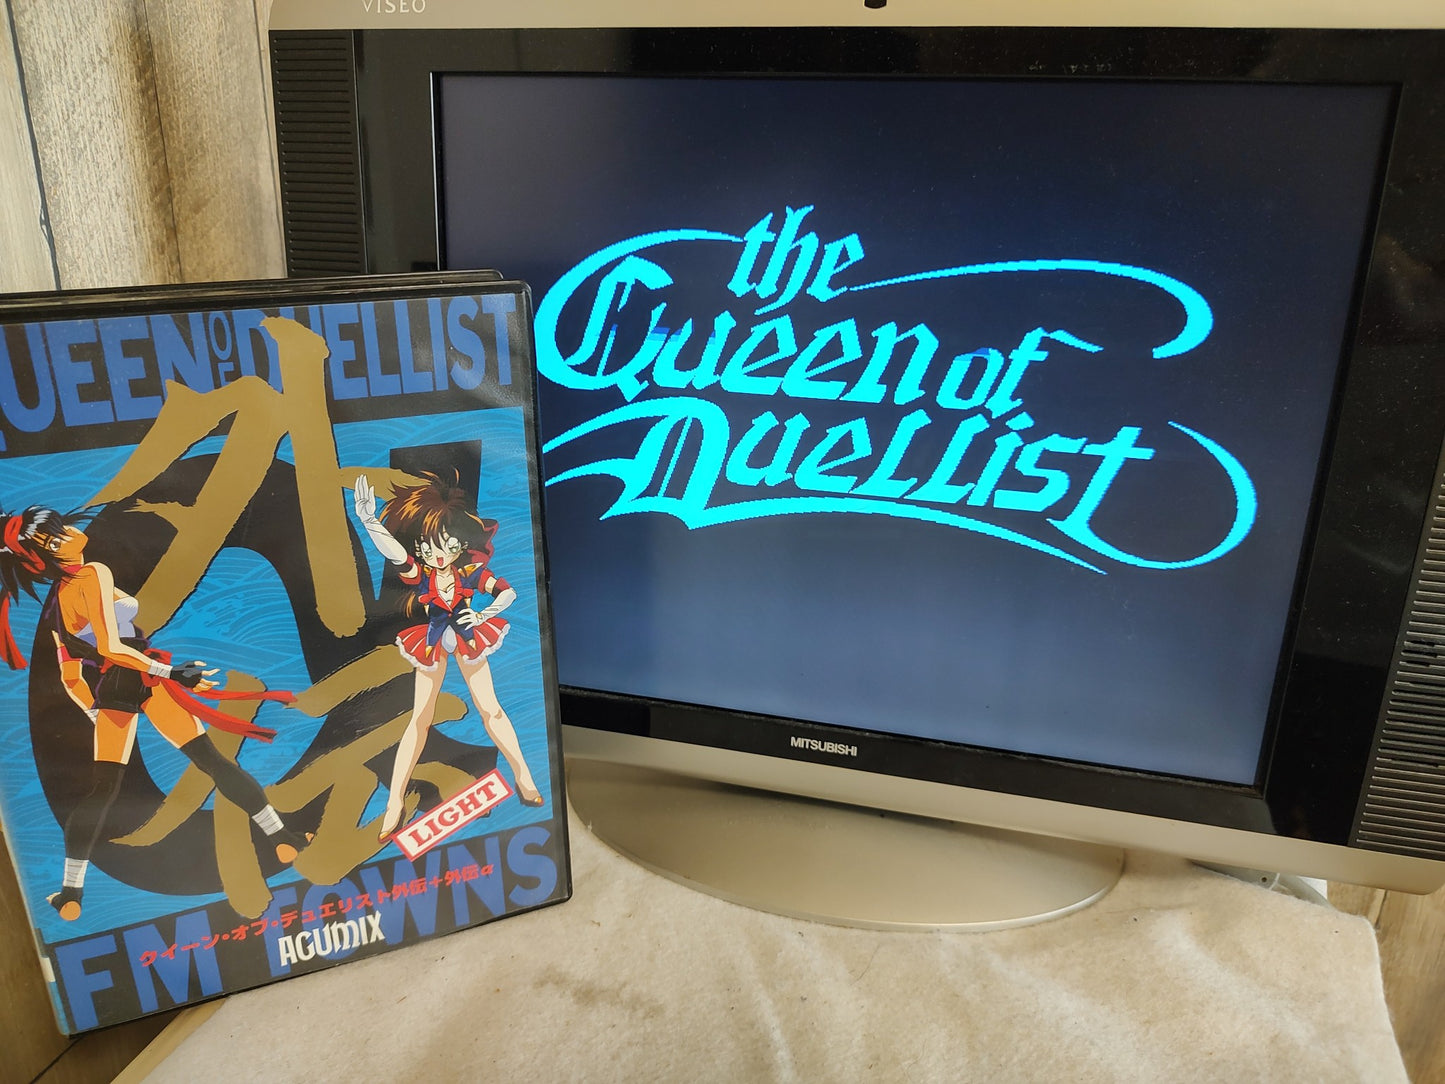 The Queen of Duellist Gaiden Alpha FM TOWNS Marty Game set, Working-f0706-